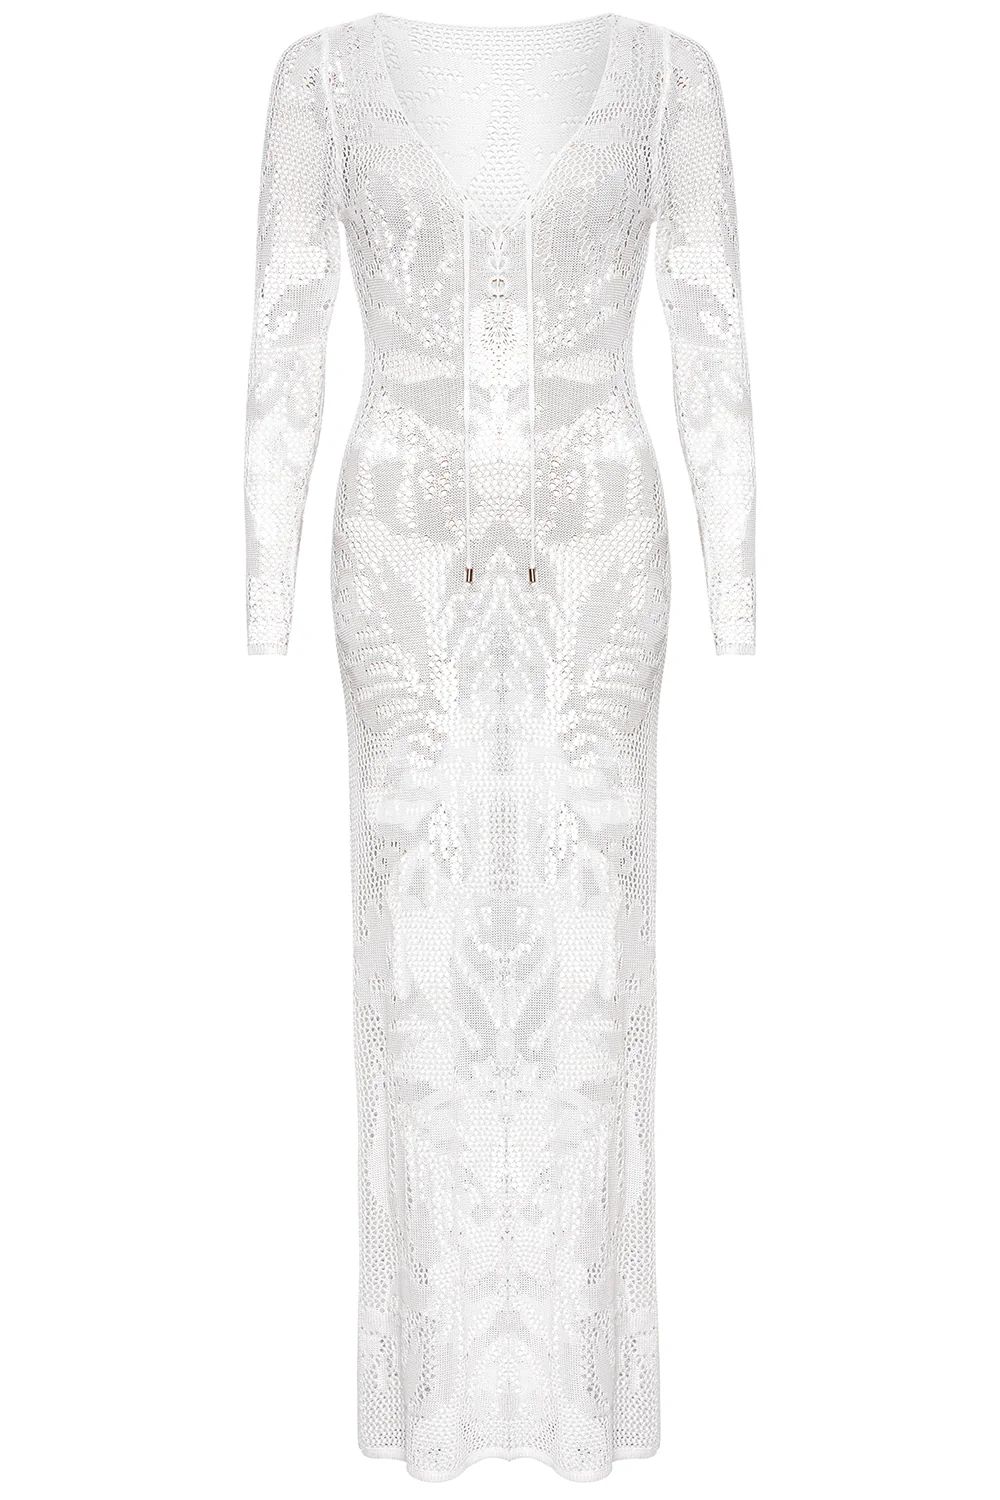 Cancun Crochet White Dress | VETCHY